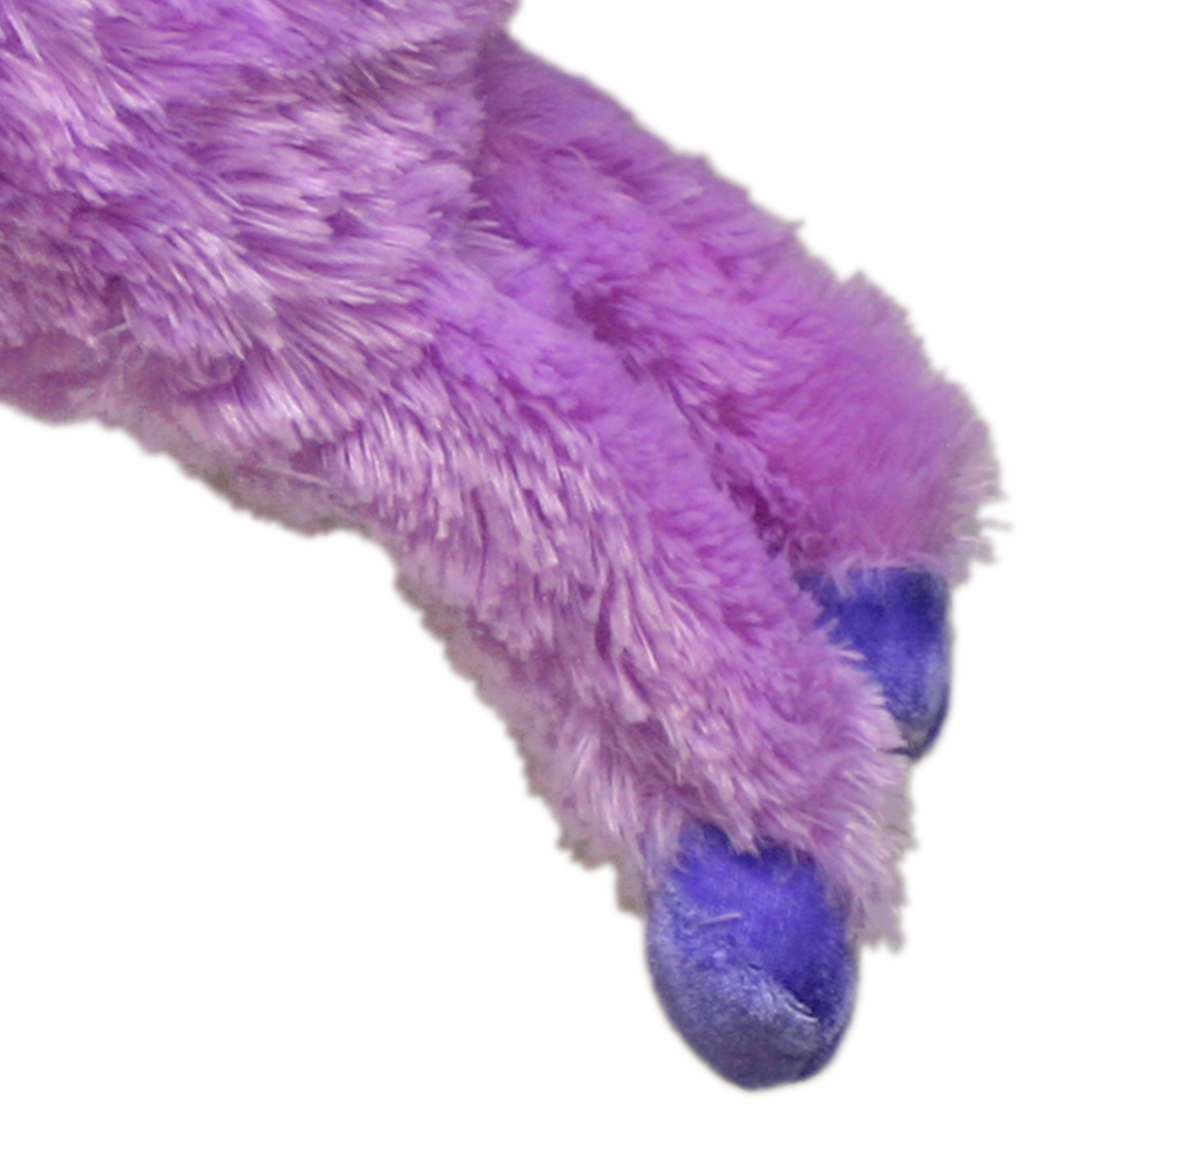 Whimsy & Charm Valentine's Day Sweatheart Love 22" Unicorn Stuffed Animal Plush Toy Soft & Fluffy - Purple - image 3 of 6